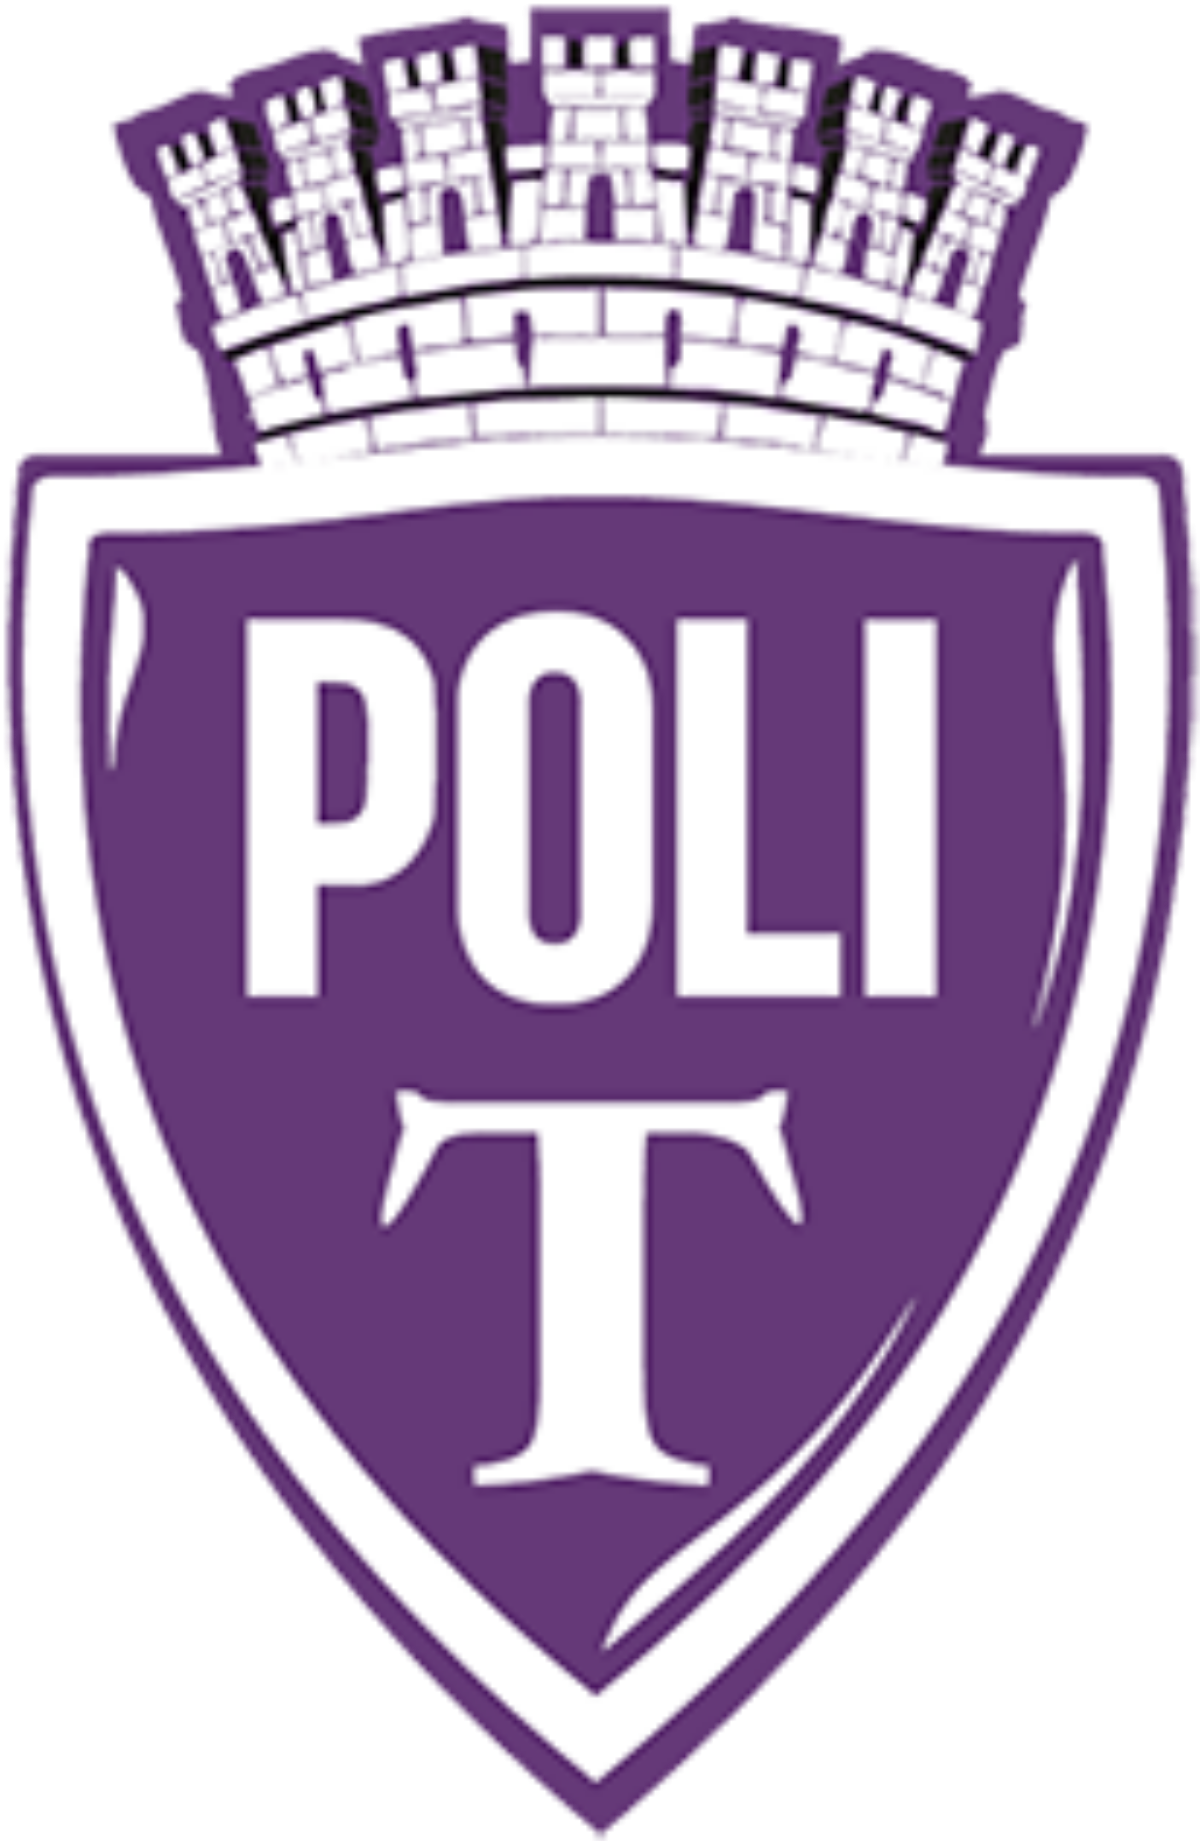 ASU Poli Timisoara logo